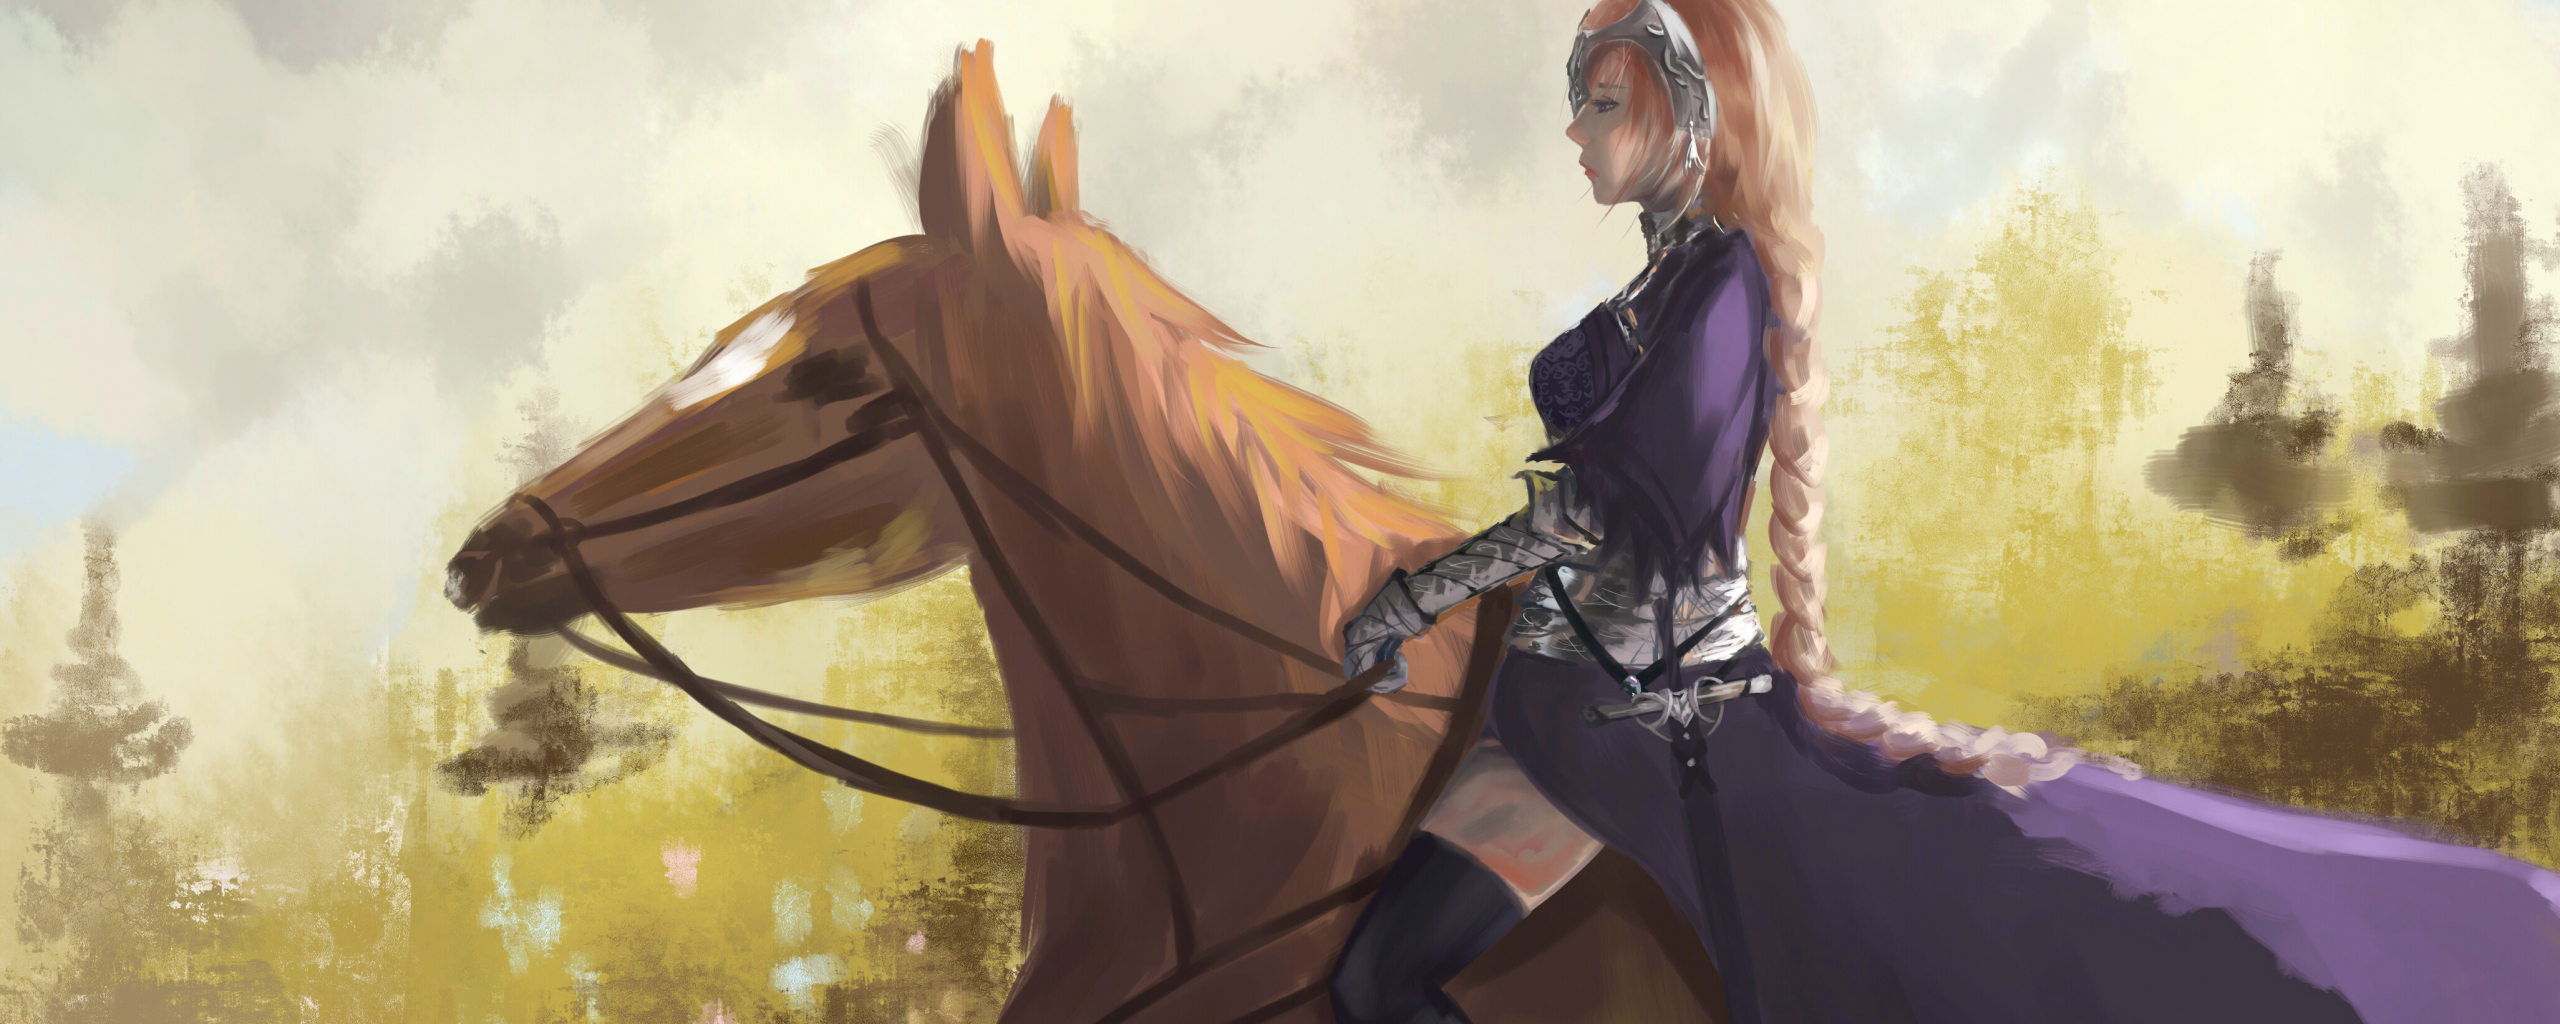 Desktop Wallpaper Ruler Fate Apocrypha Horse Anime Girl Art Hd Image Picture Background D556bf